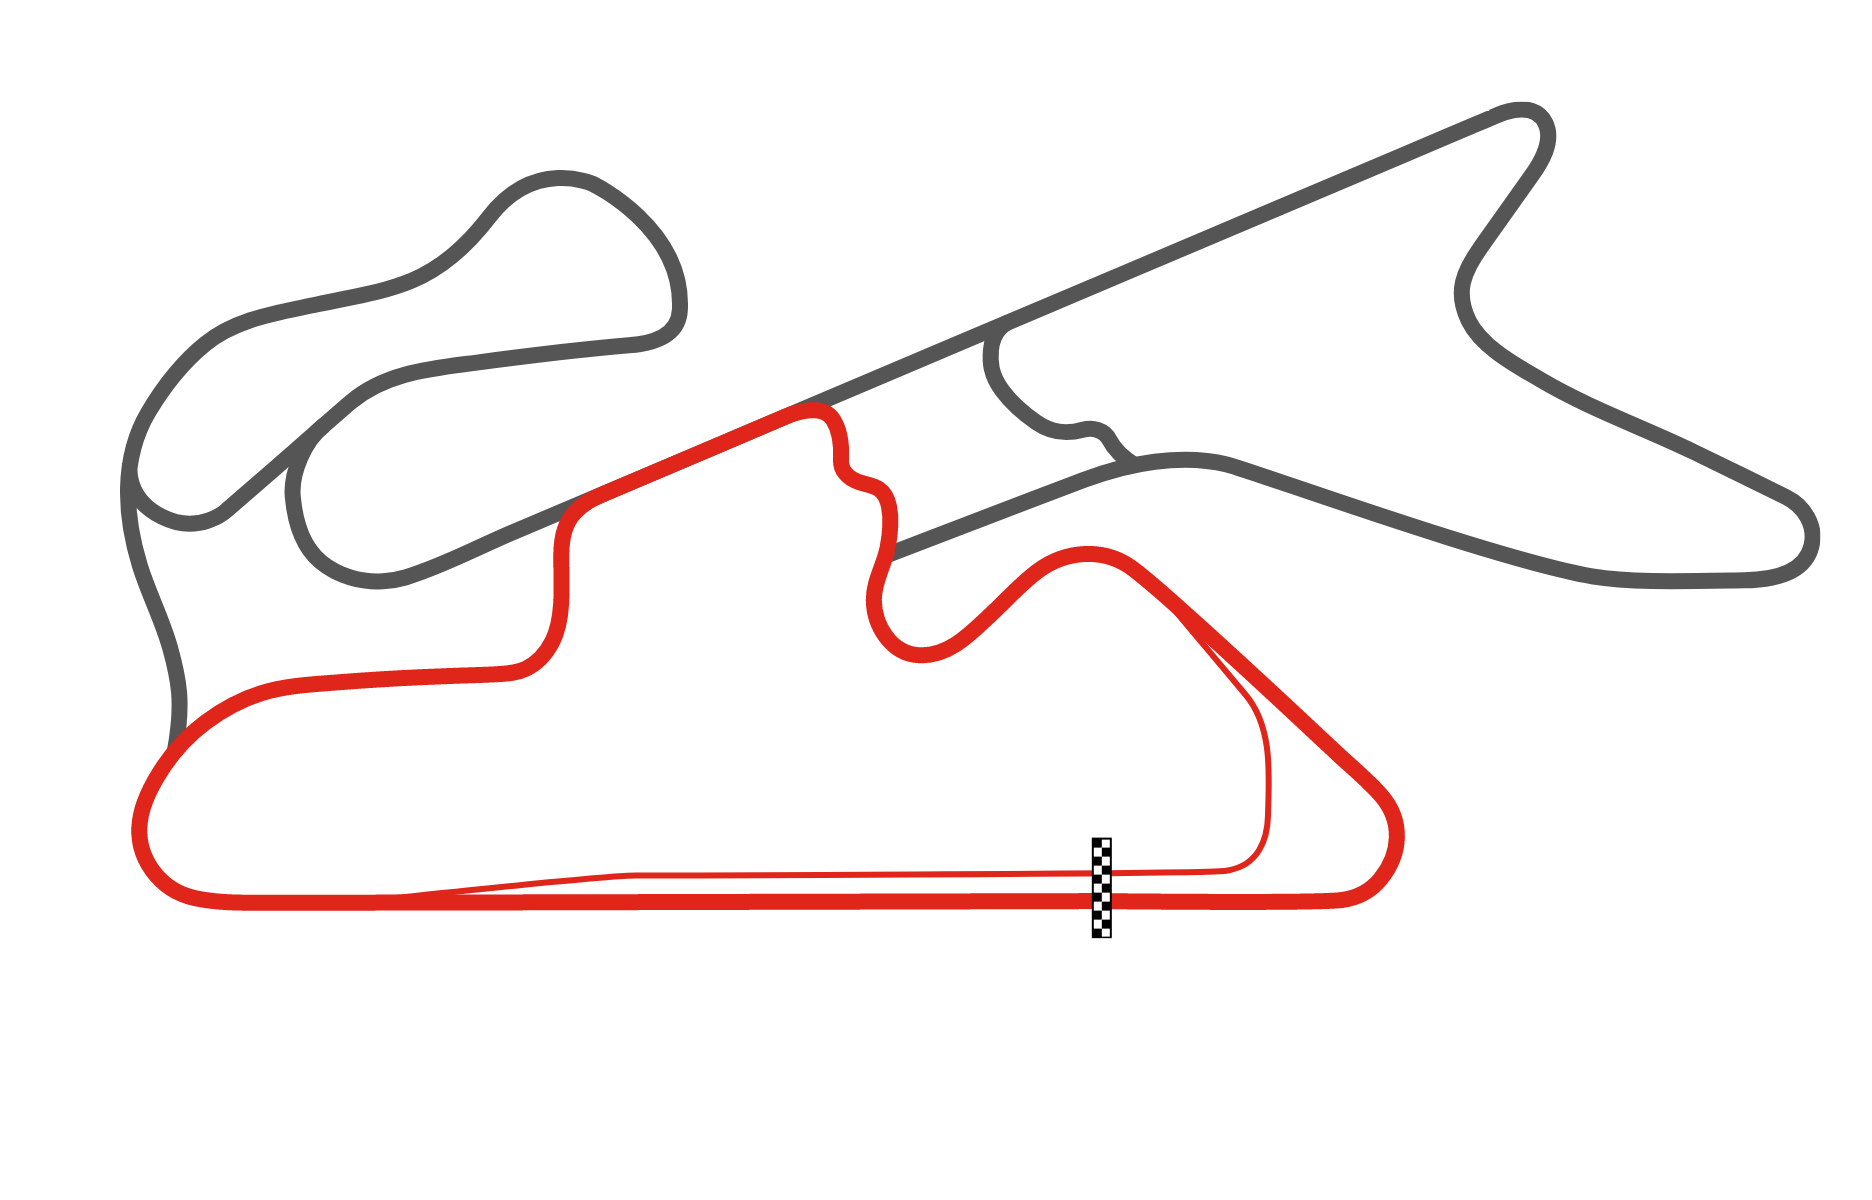 motorsports_track_information